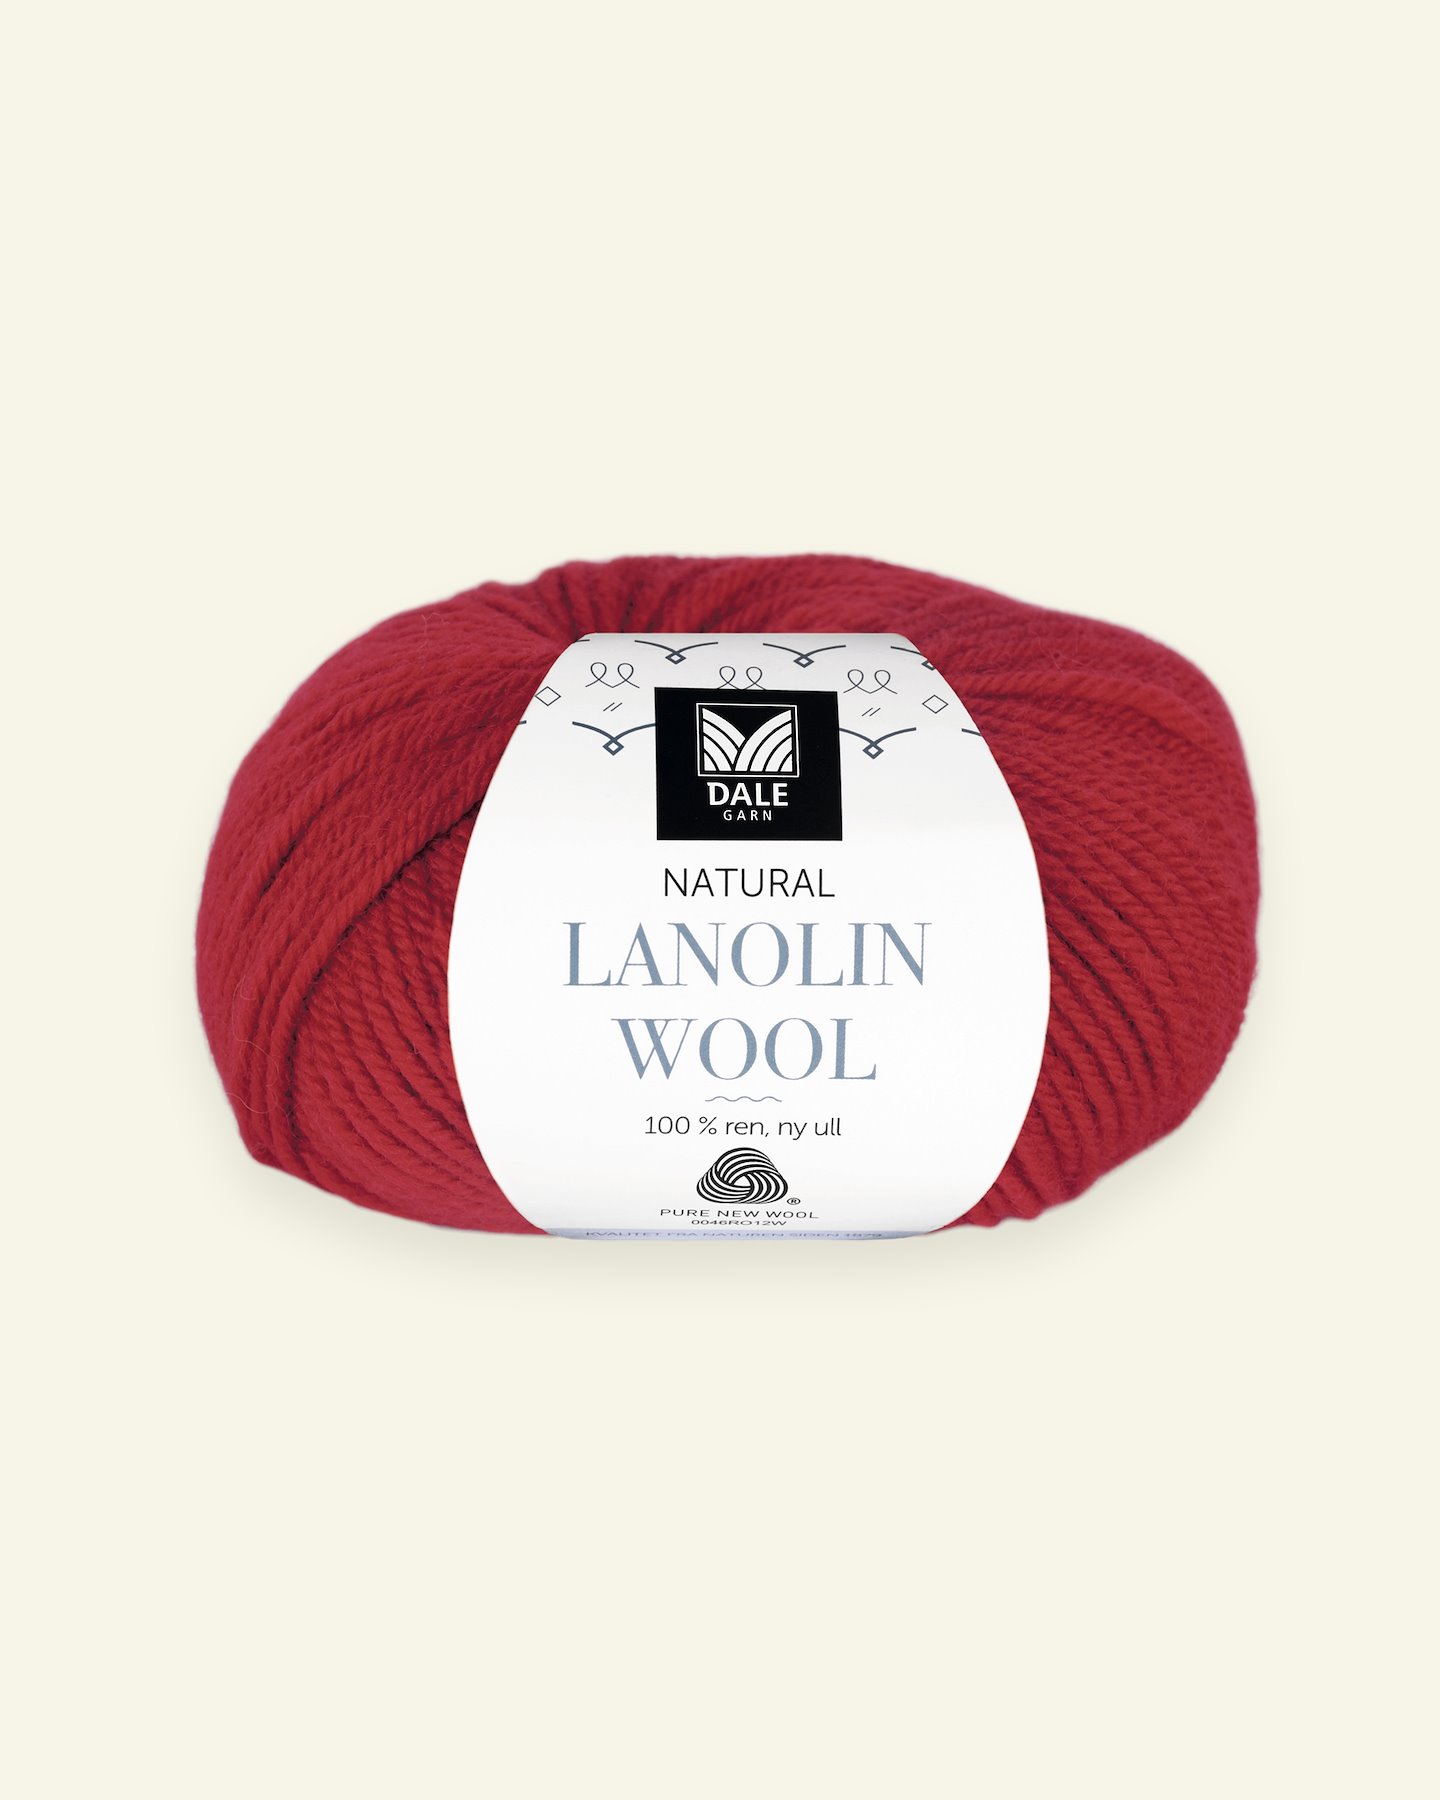 Dale Garn, 100% uldgarn "Lanolin Wool", rød (1407) 90000276_pack